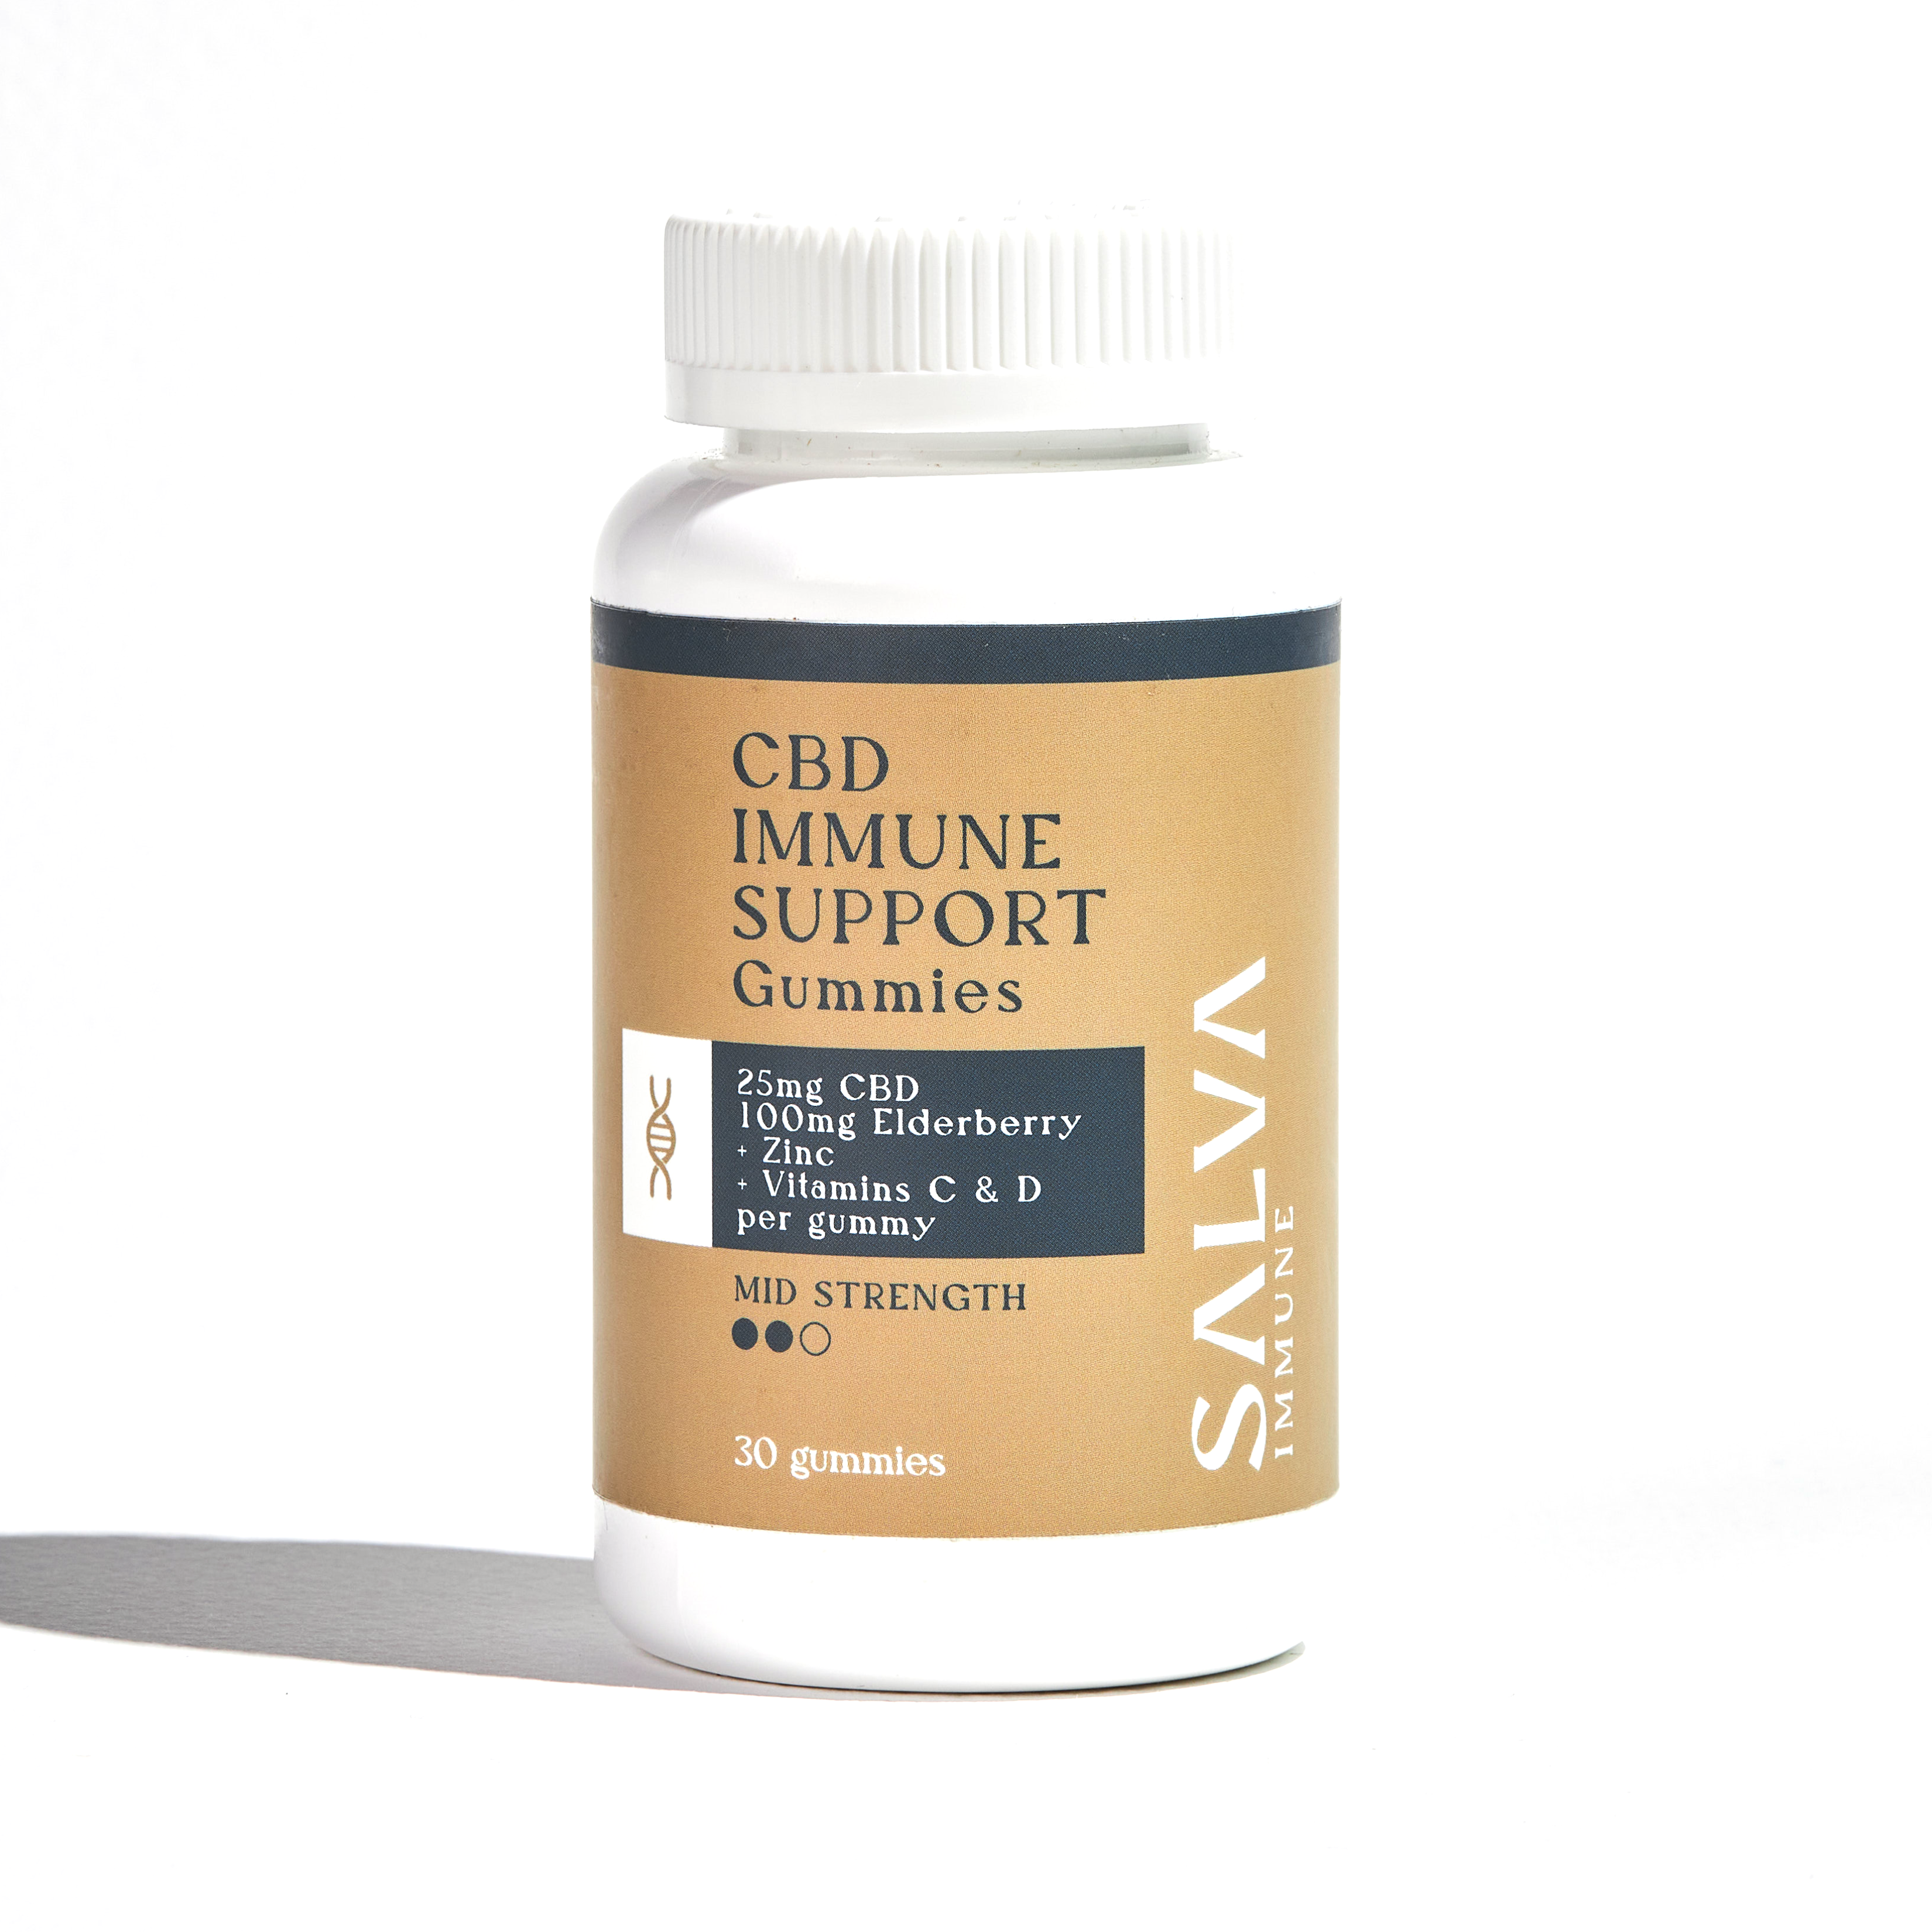 SALVA CBD Immune Support Gummies: 25mg CBD 100mg Elderberry + Zinc + Vitamins C & D (30 gummies)